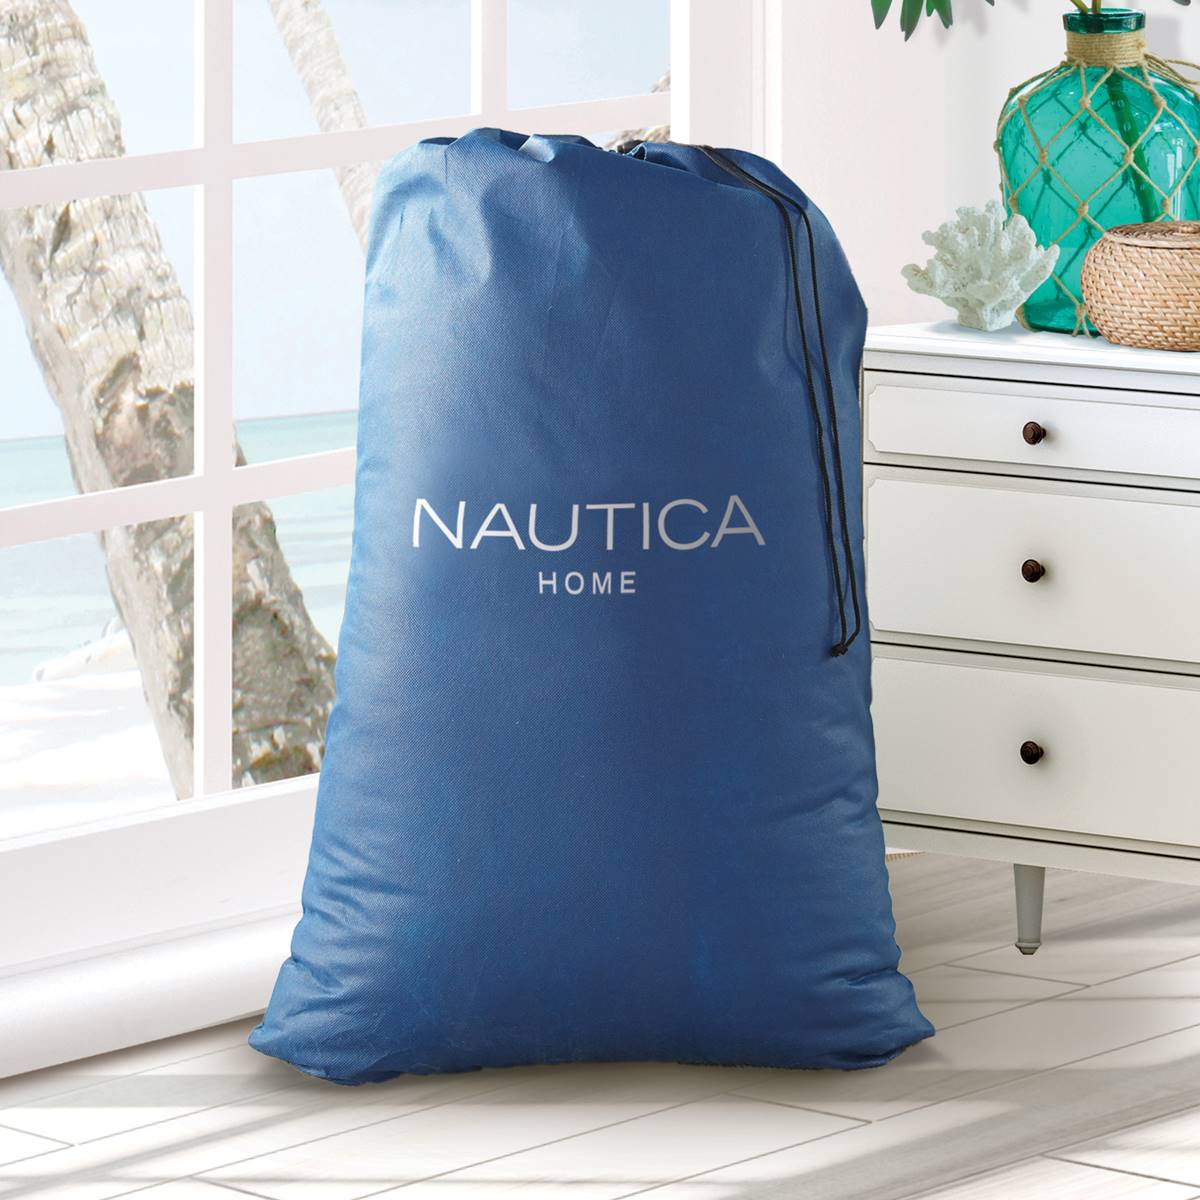 Nautica Home Support Aire Pillowtop Full Air Mattress